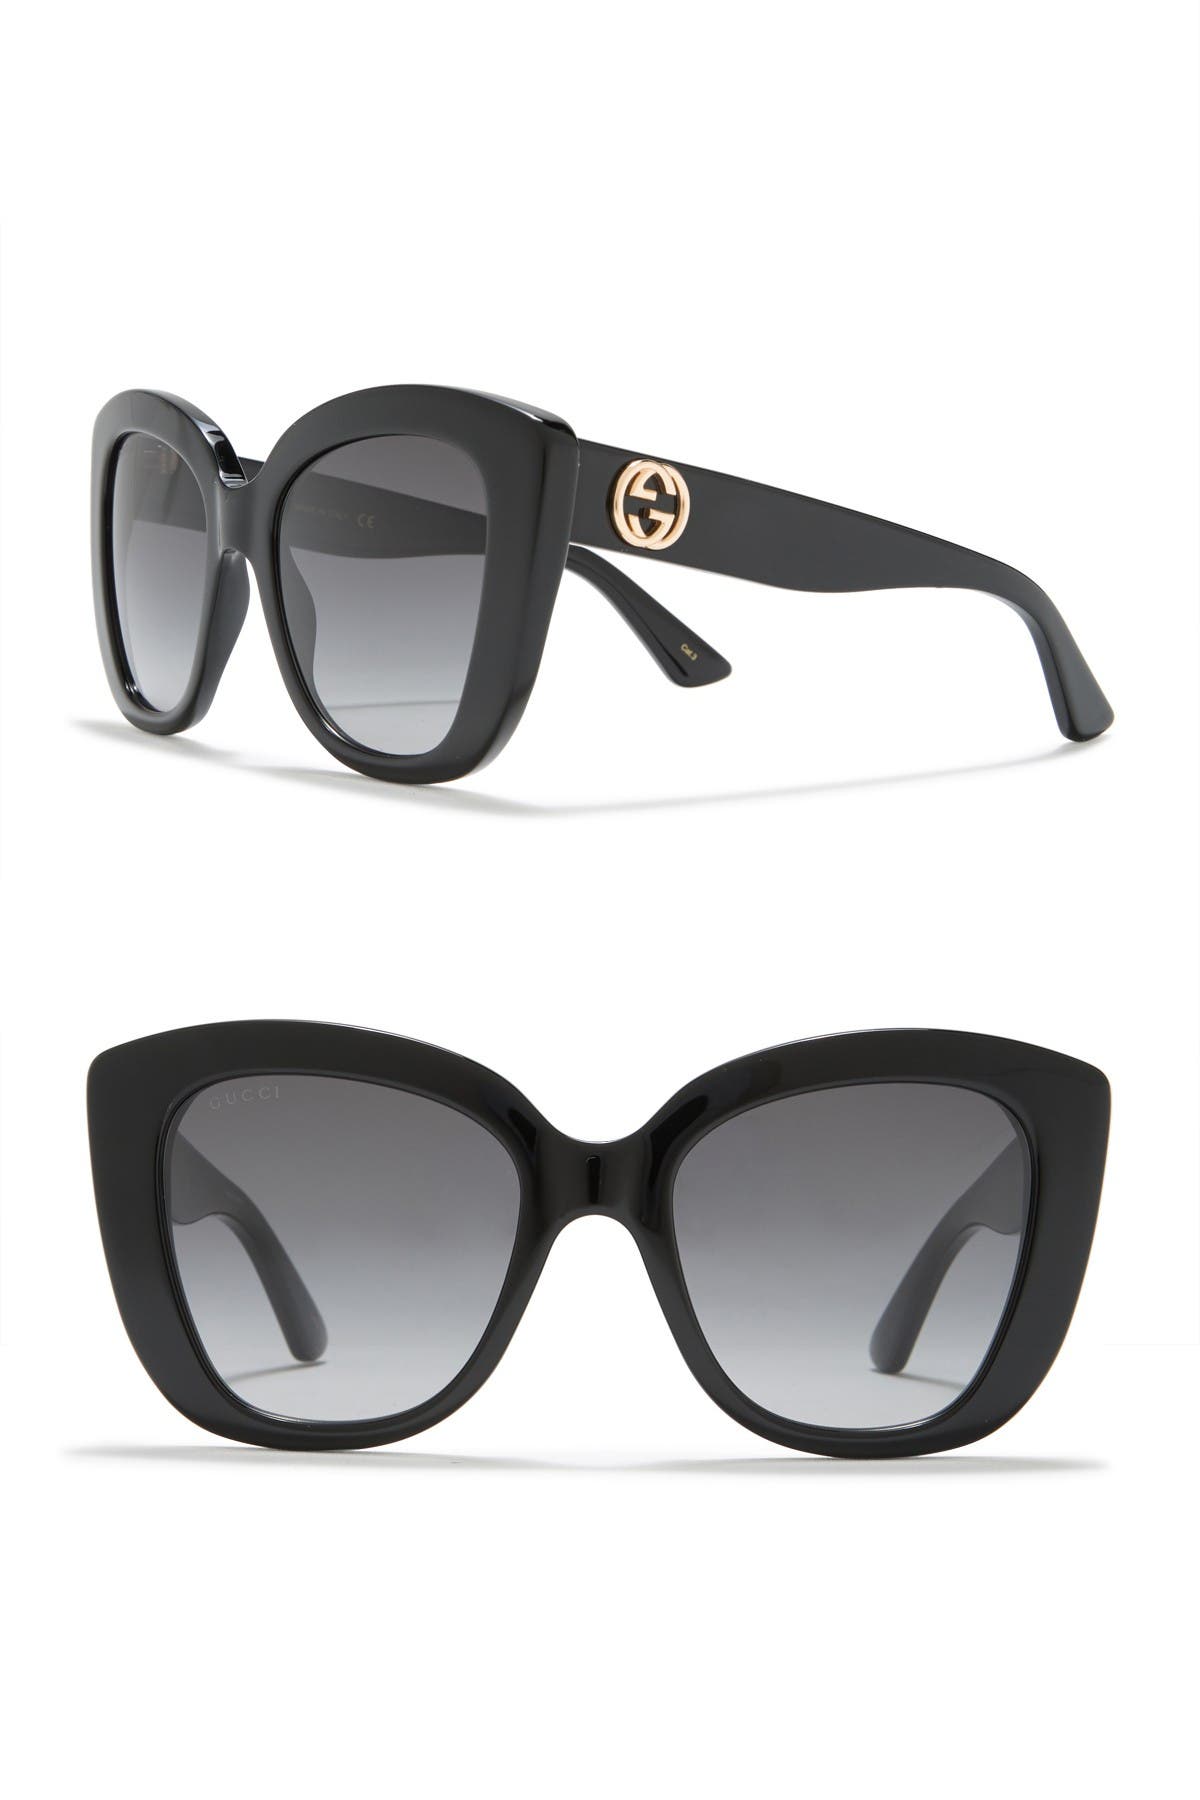 gucci women's cat eye sunglasses